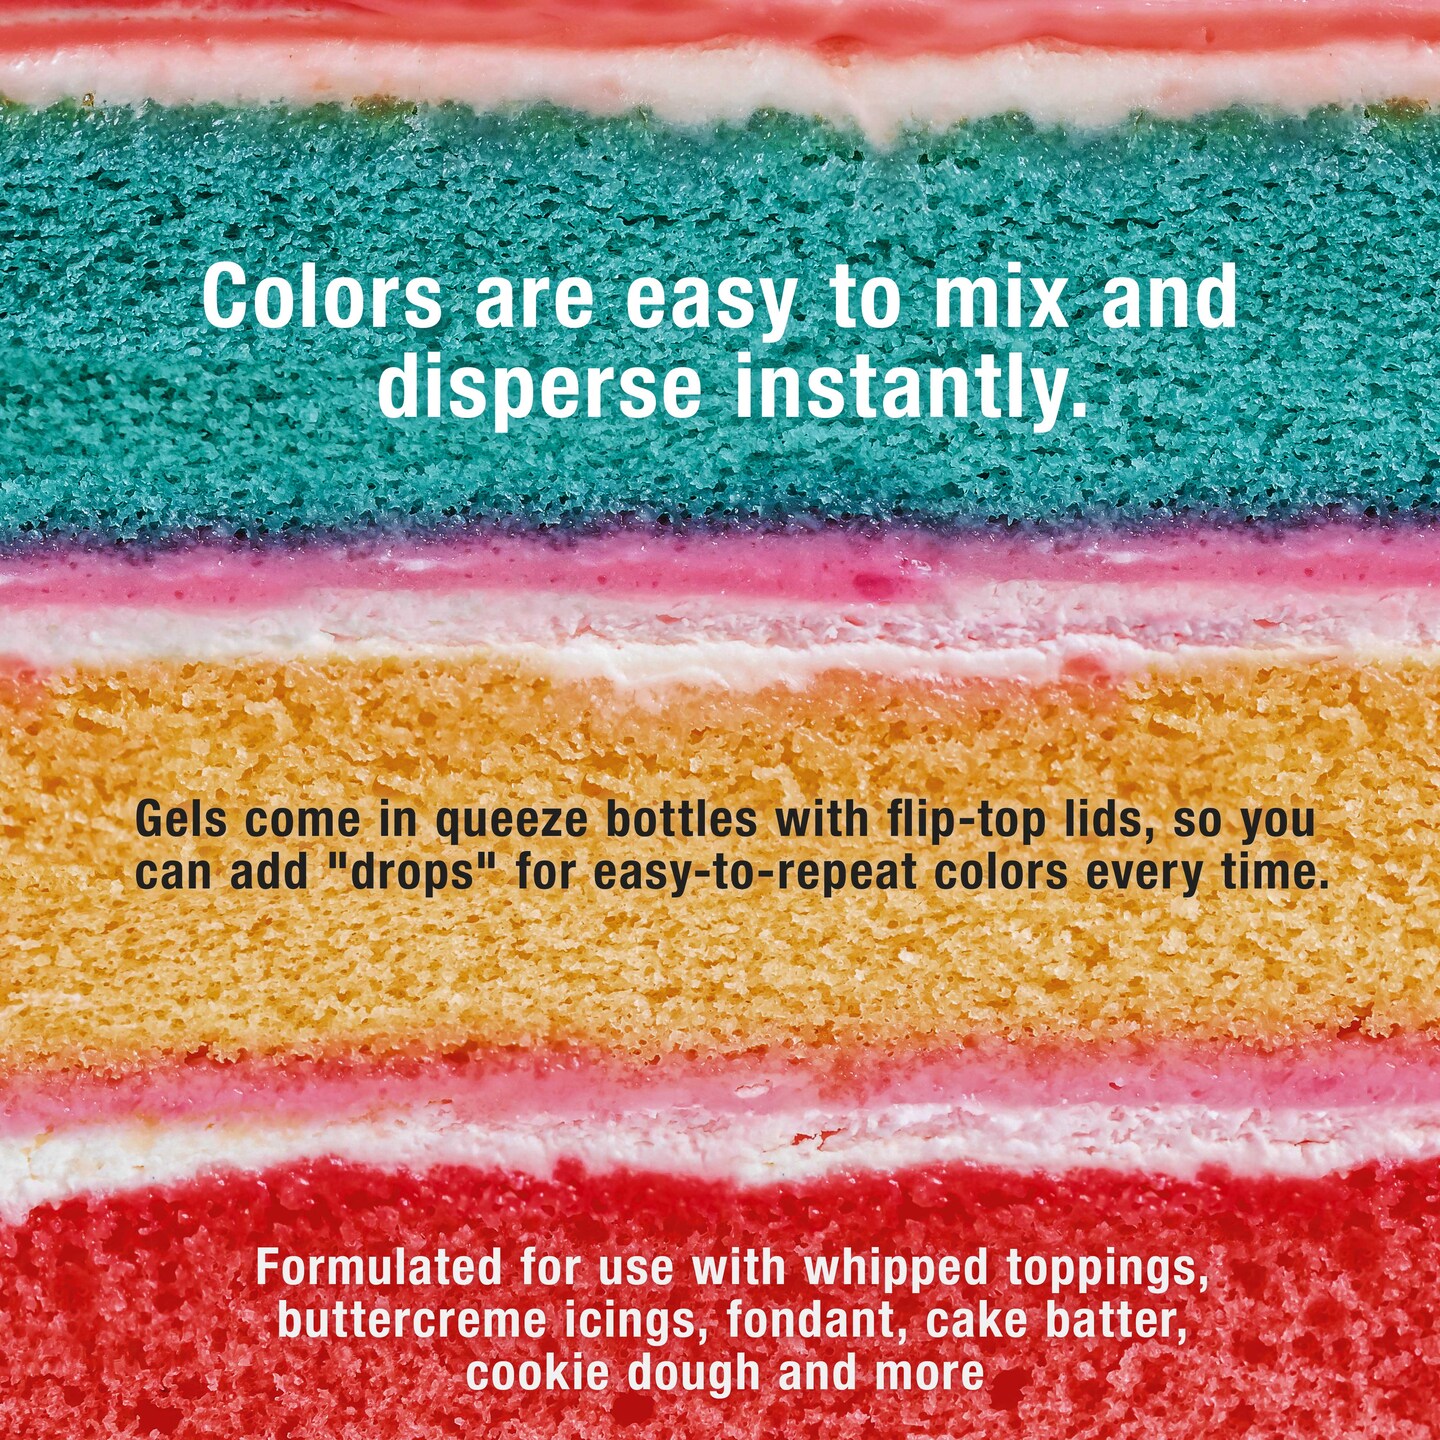 US Cake Supply by Chefmaster 6 Liqua-Gel Cake Color Kit, 0.7 fl. oz.